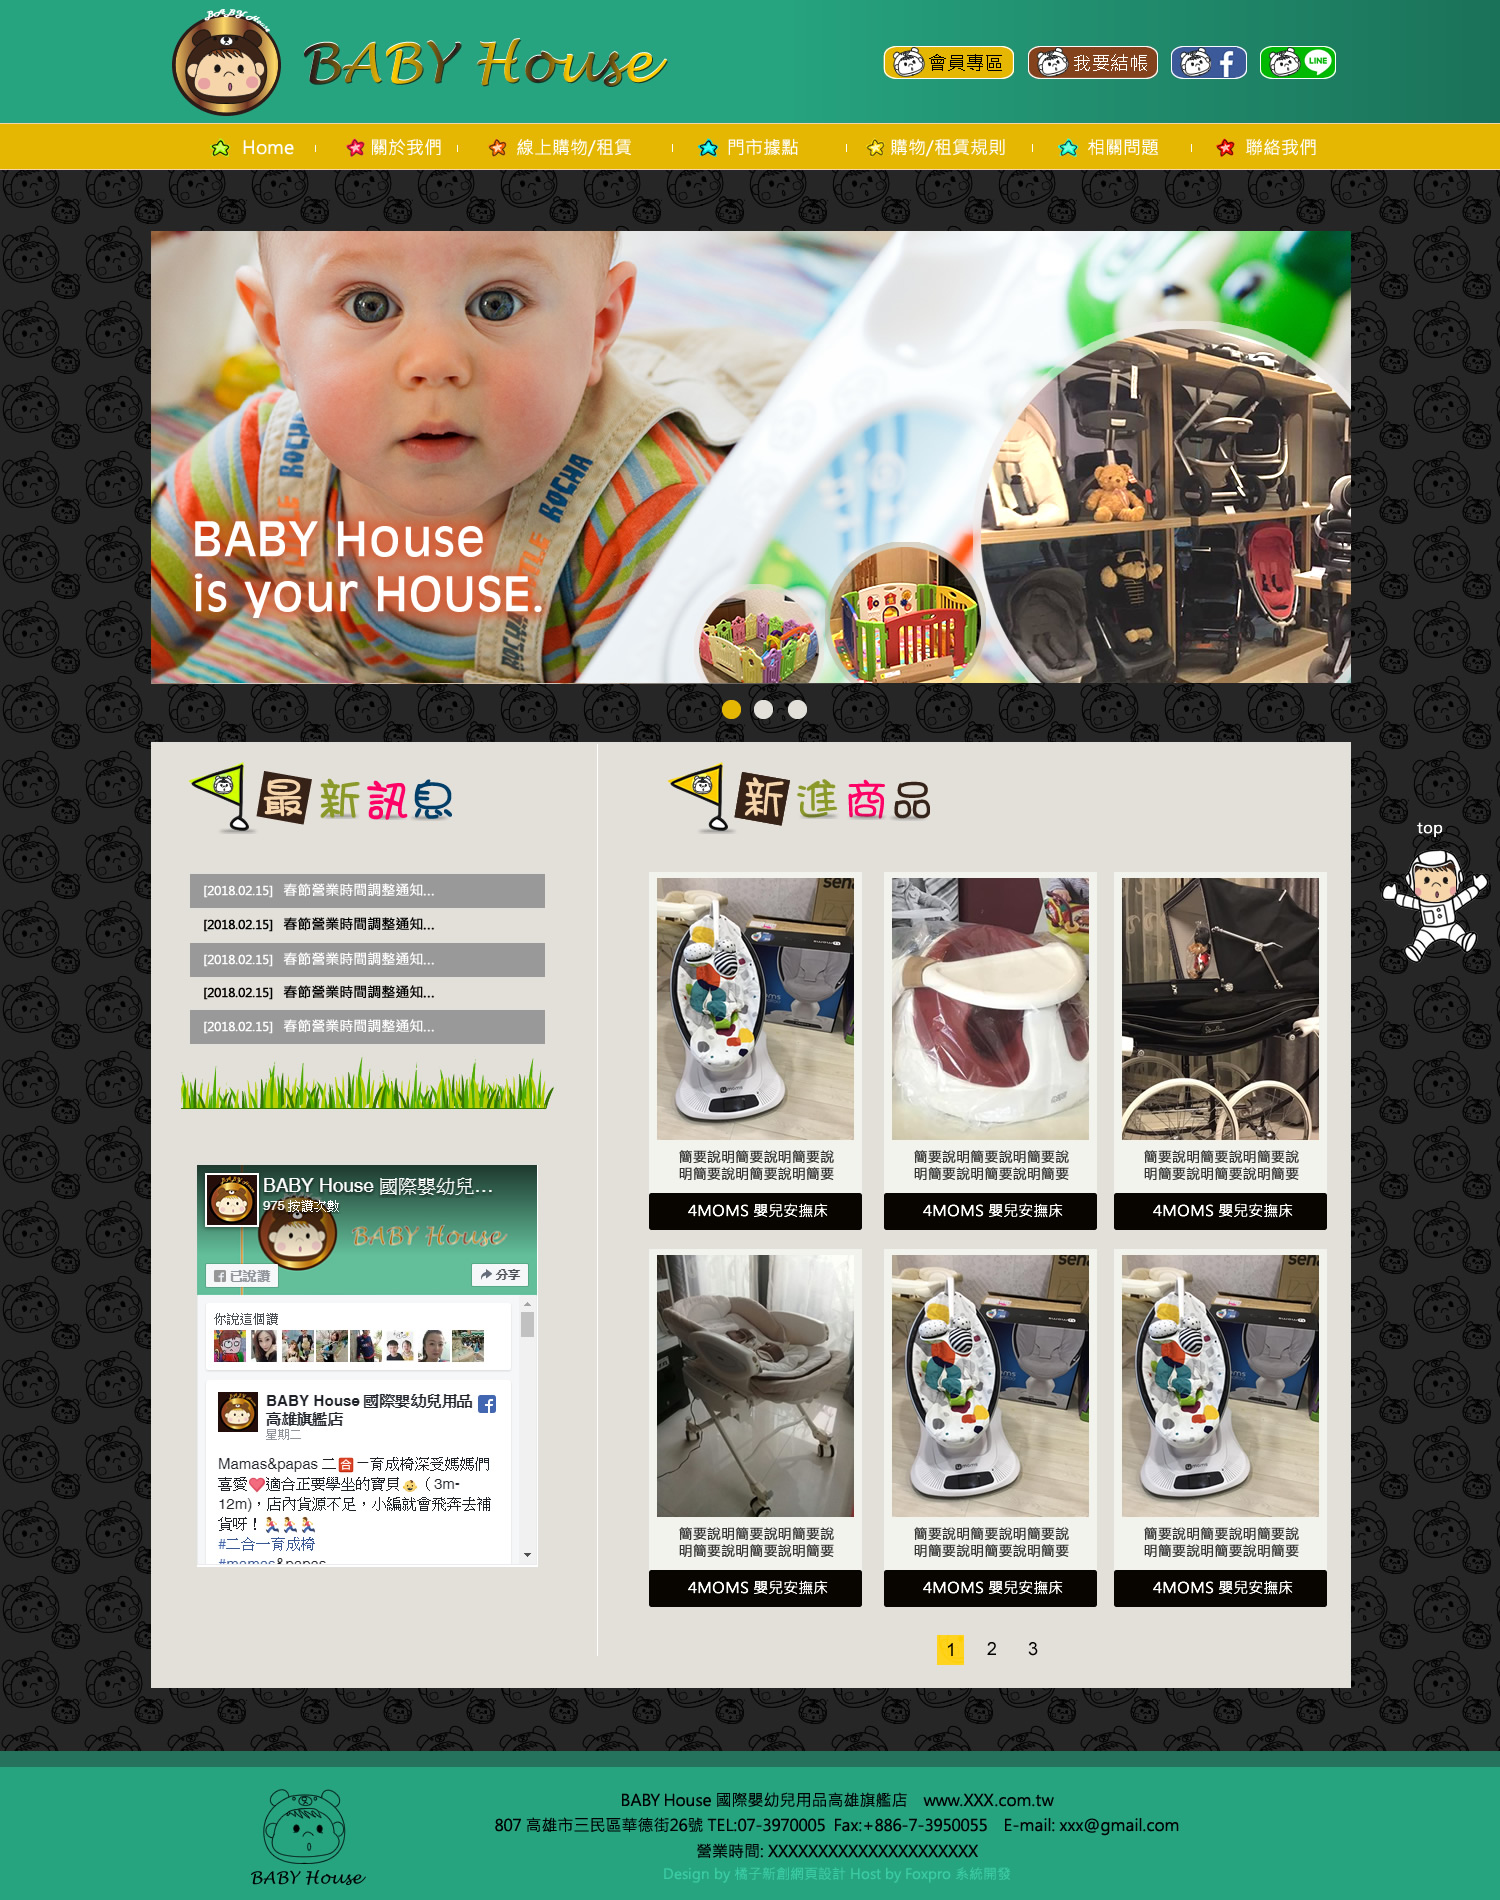 BABY House 國際嬰幼兒用品高雄旗艦店-橘子軟件網頁設計案例圖片